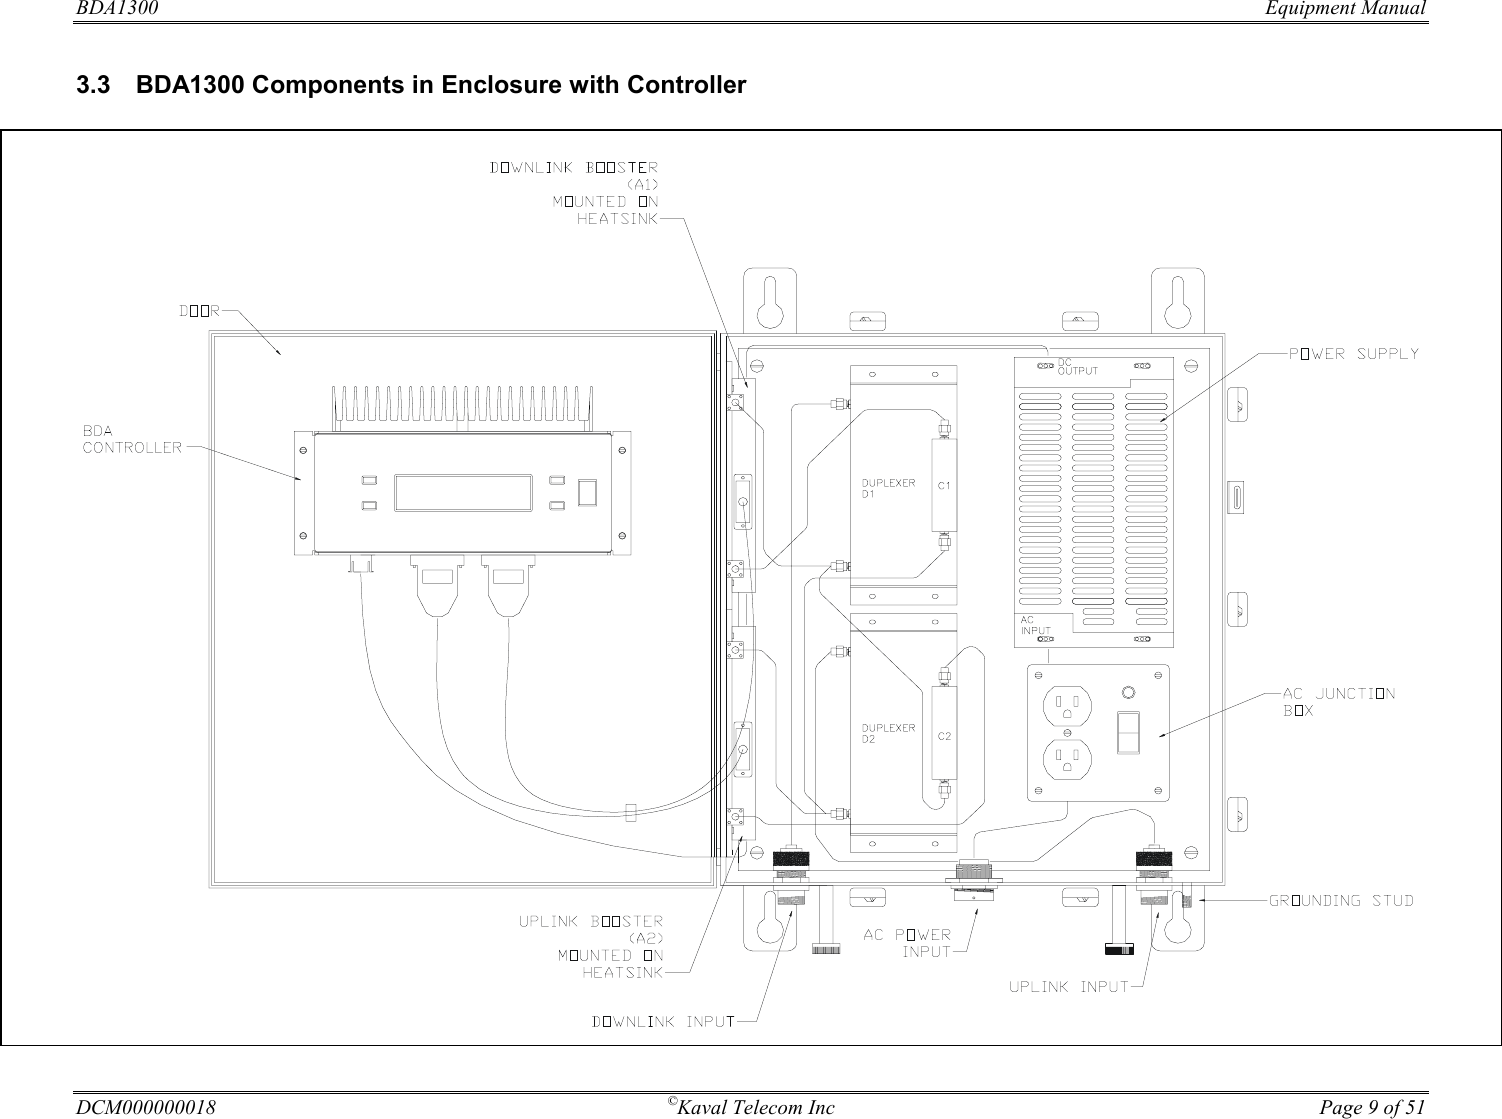 BDA1300   Equipment Manual DCM000000018  ©Kaval Telecom Inc  Page 9 of 51 3.3  BDA1300 Components in Enclosure with Controller   